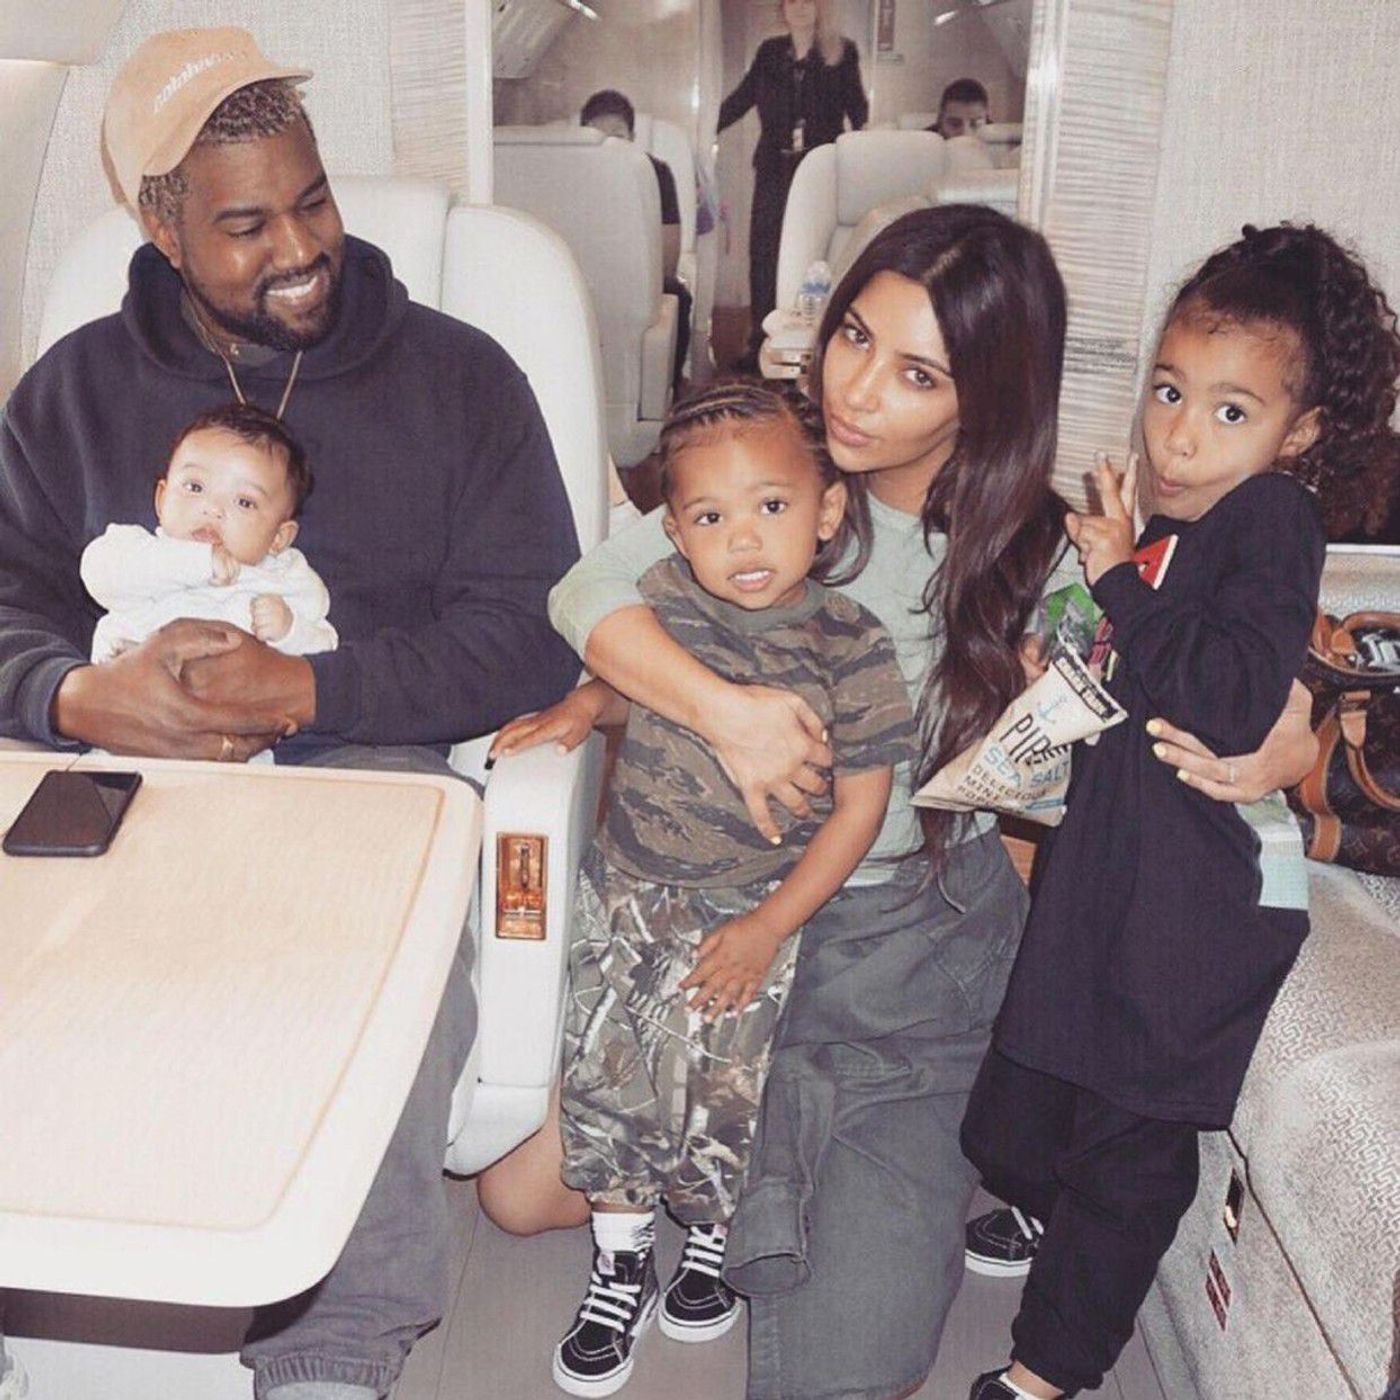 Kanye West Latest (Part 3: Protecting the Kids) Image